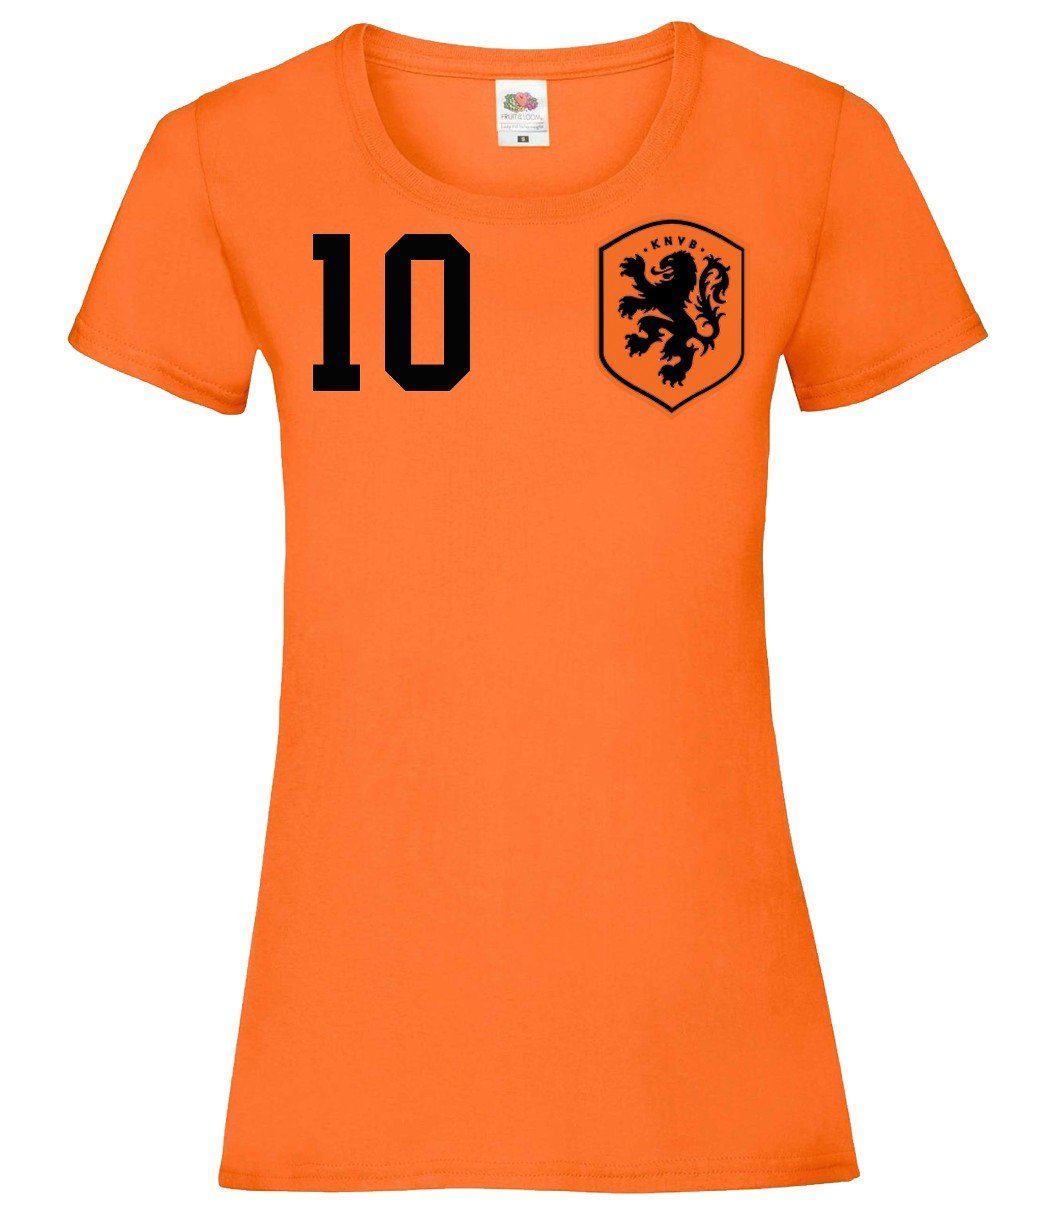 T-Shirt Funshirt Shirt "Made in Germany" German Deutschland Spruch Fun Gag Decal 